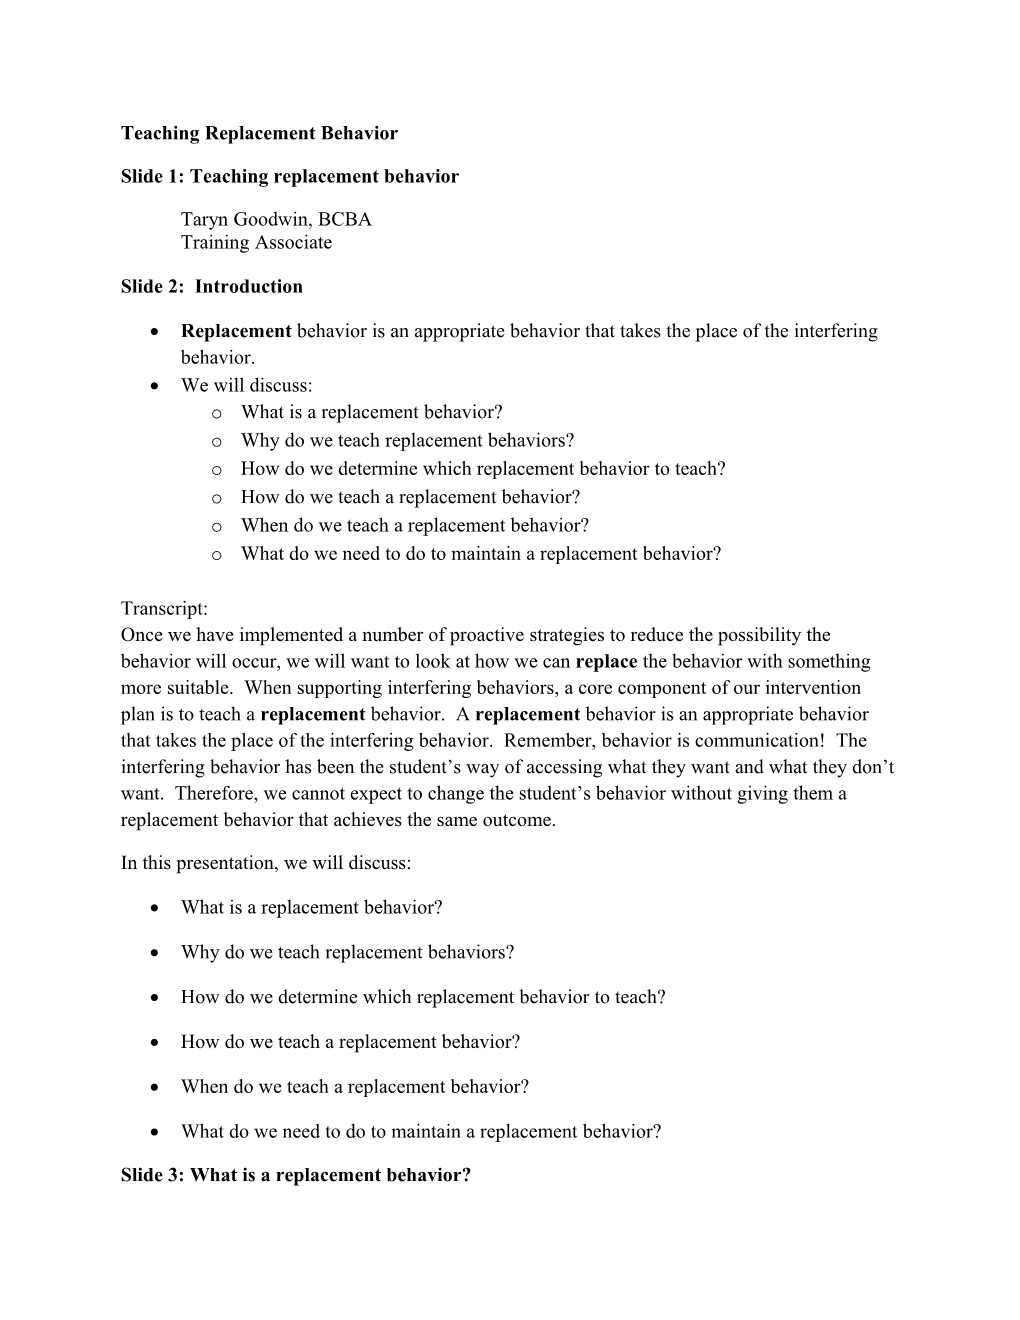 Slide 1: Teaching Replacement Behavior